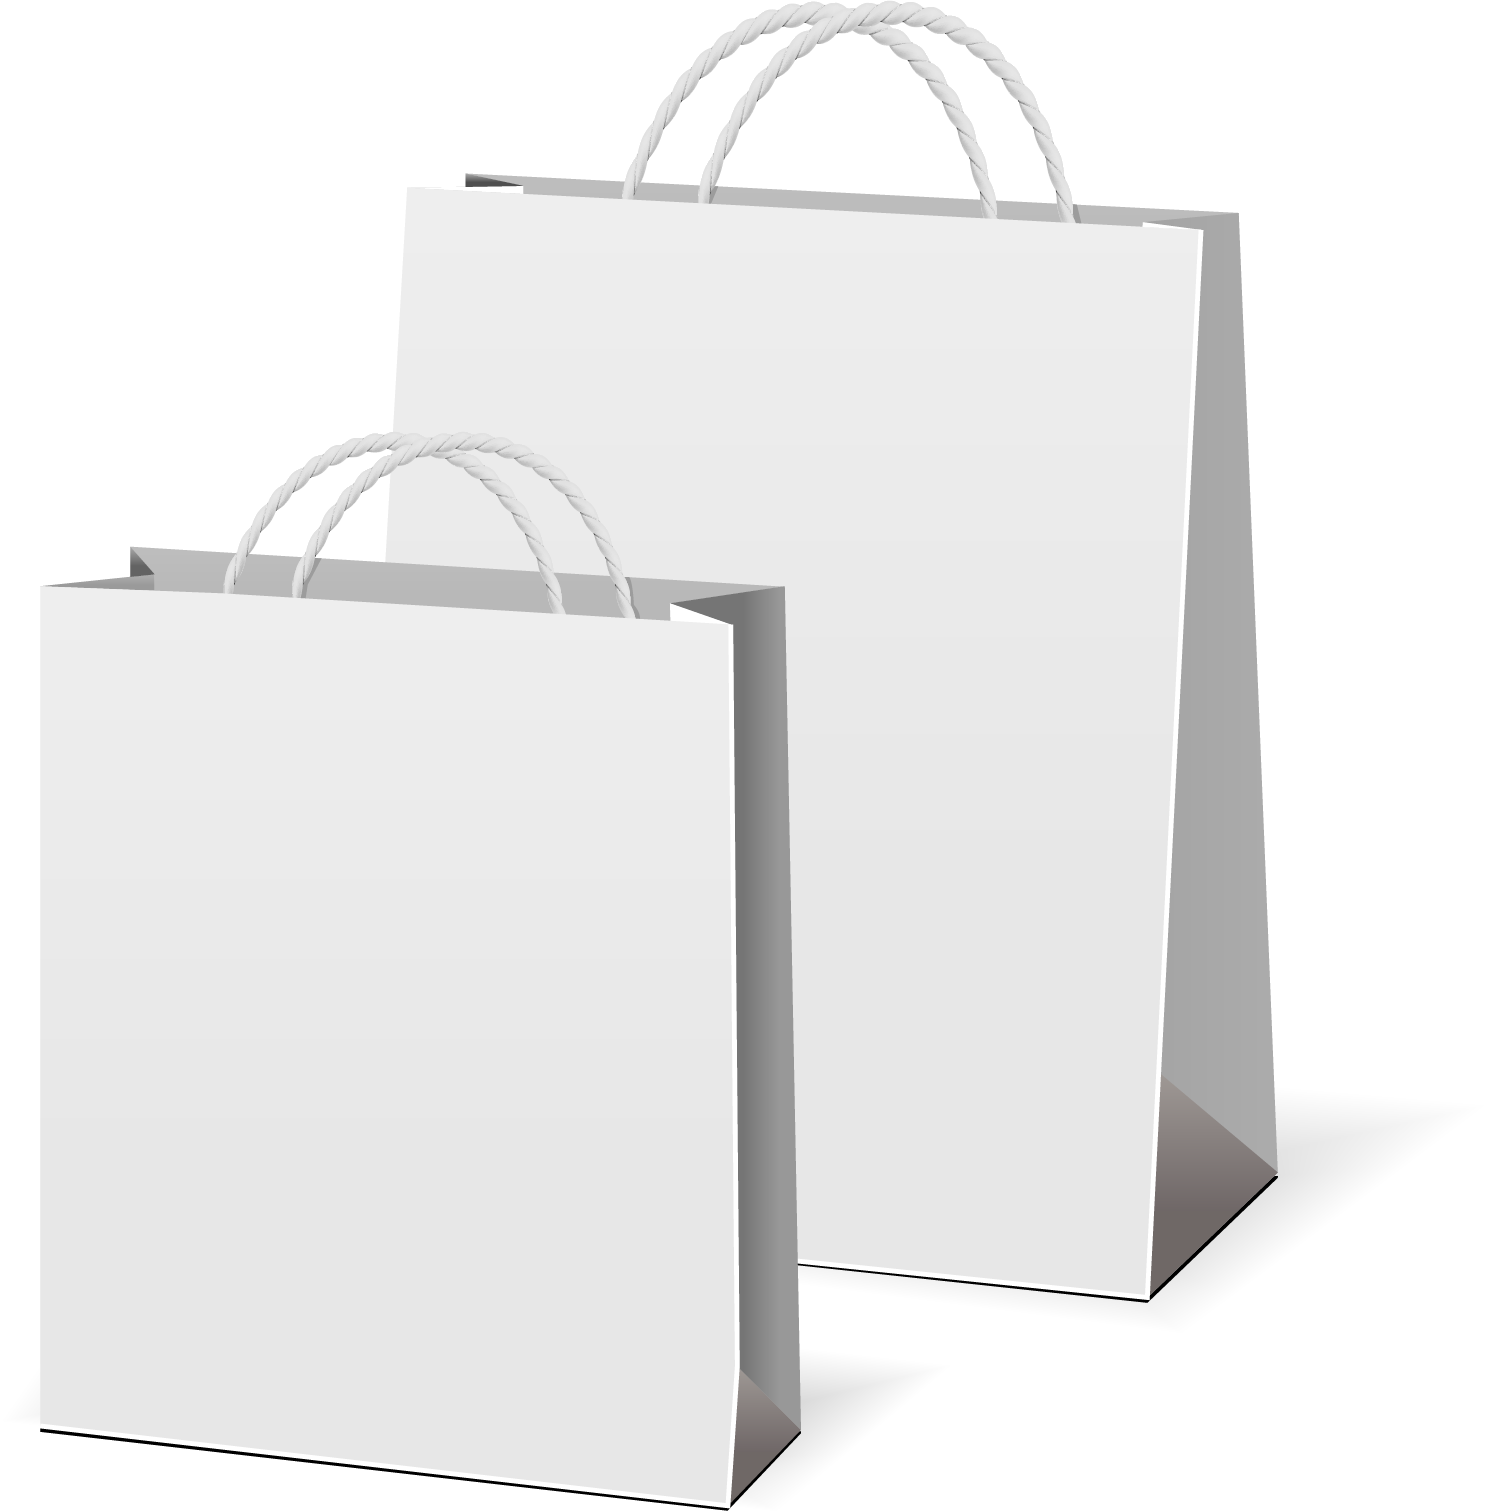 Shopping Bag PNG Background Image